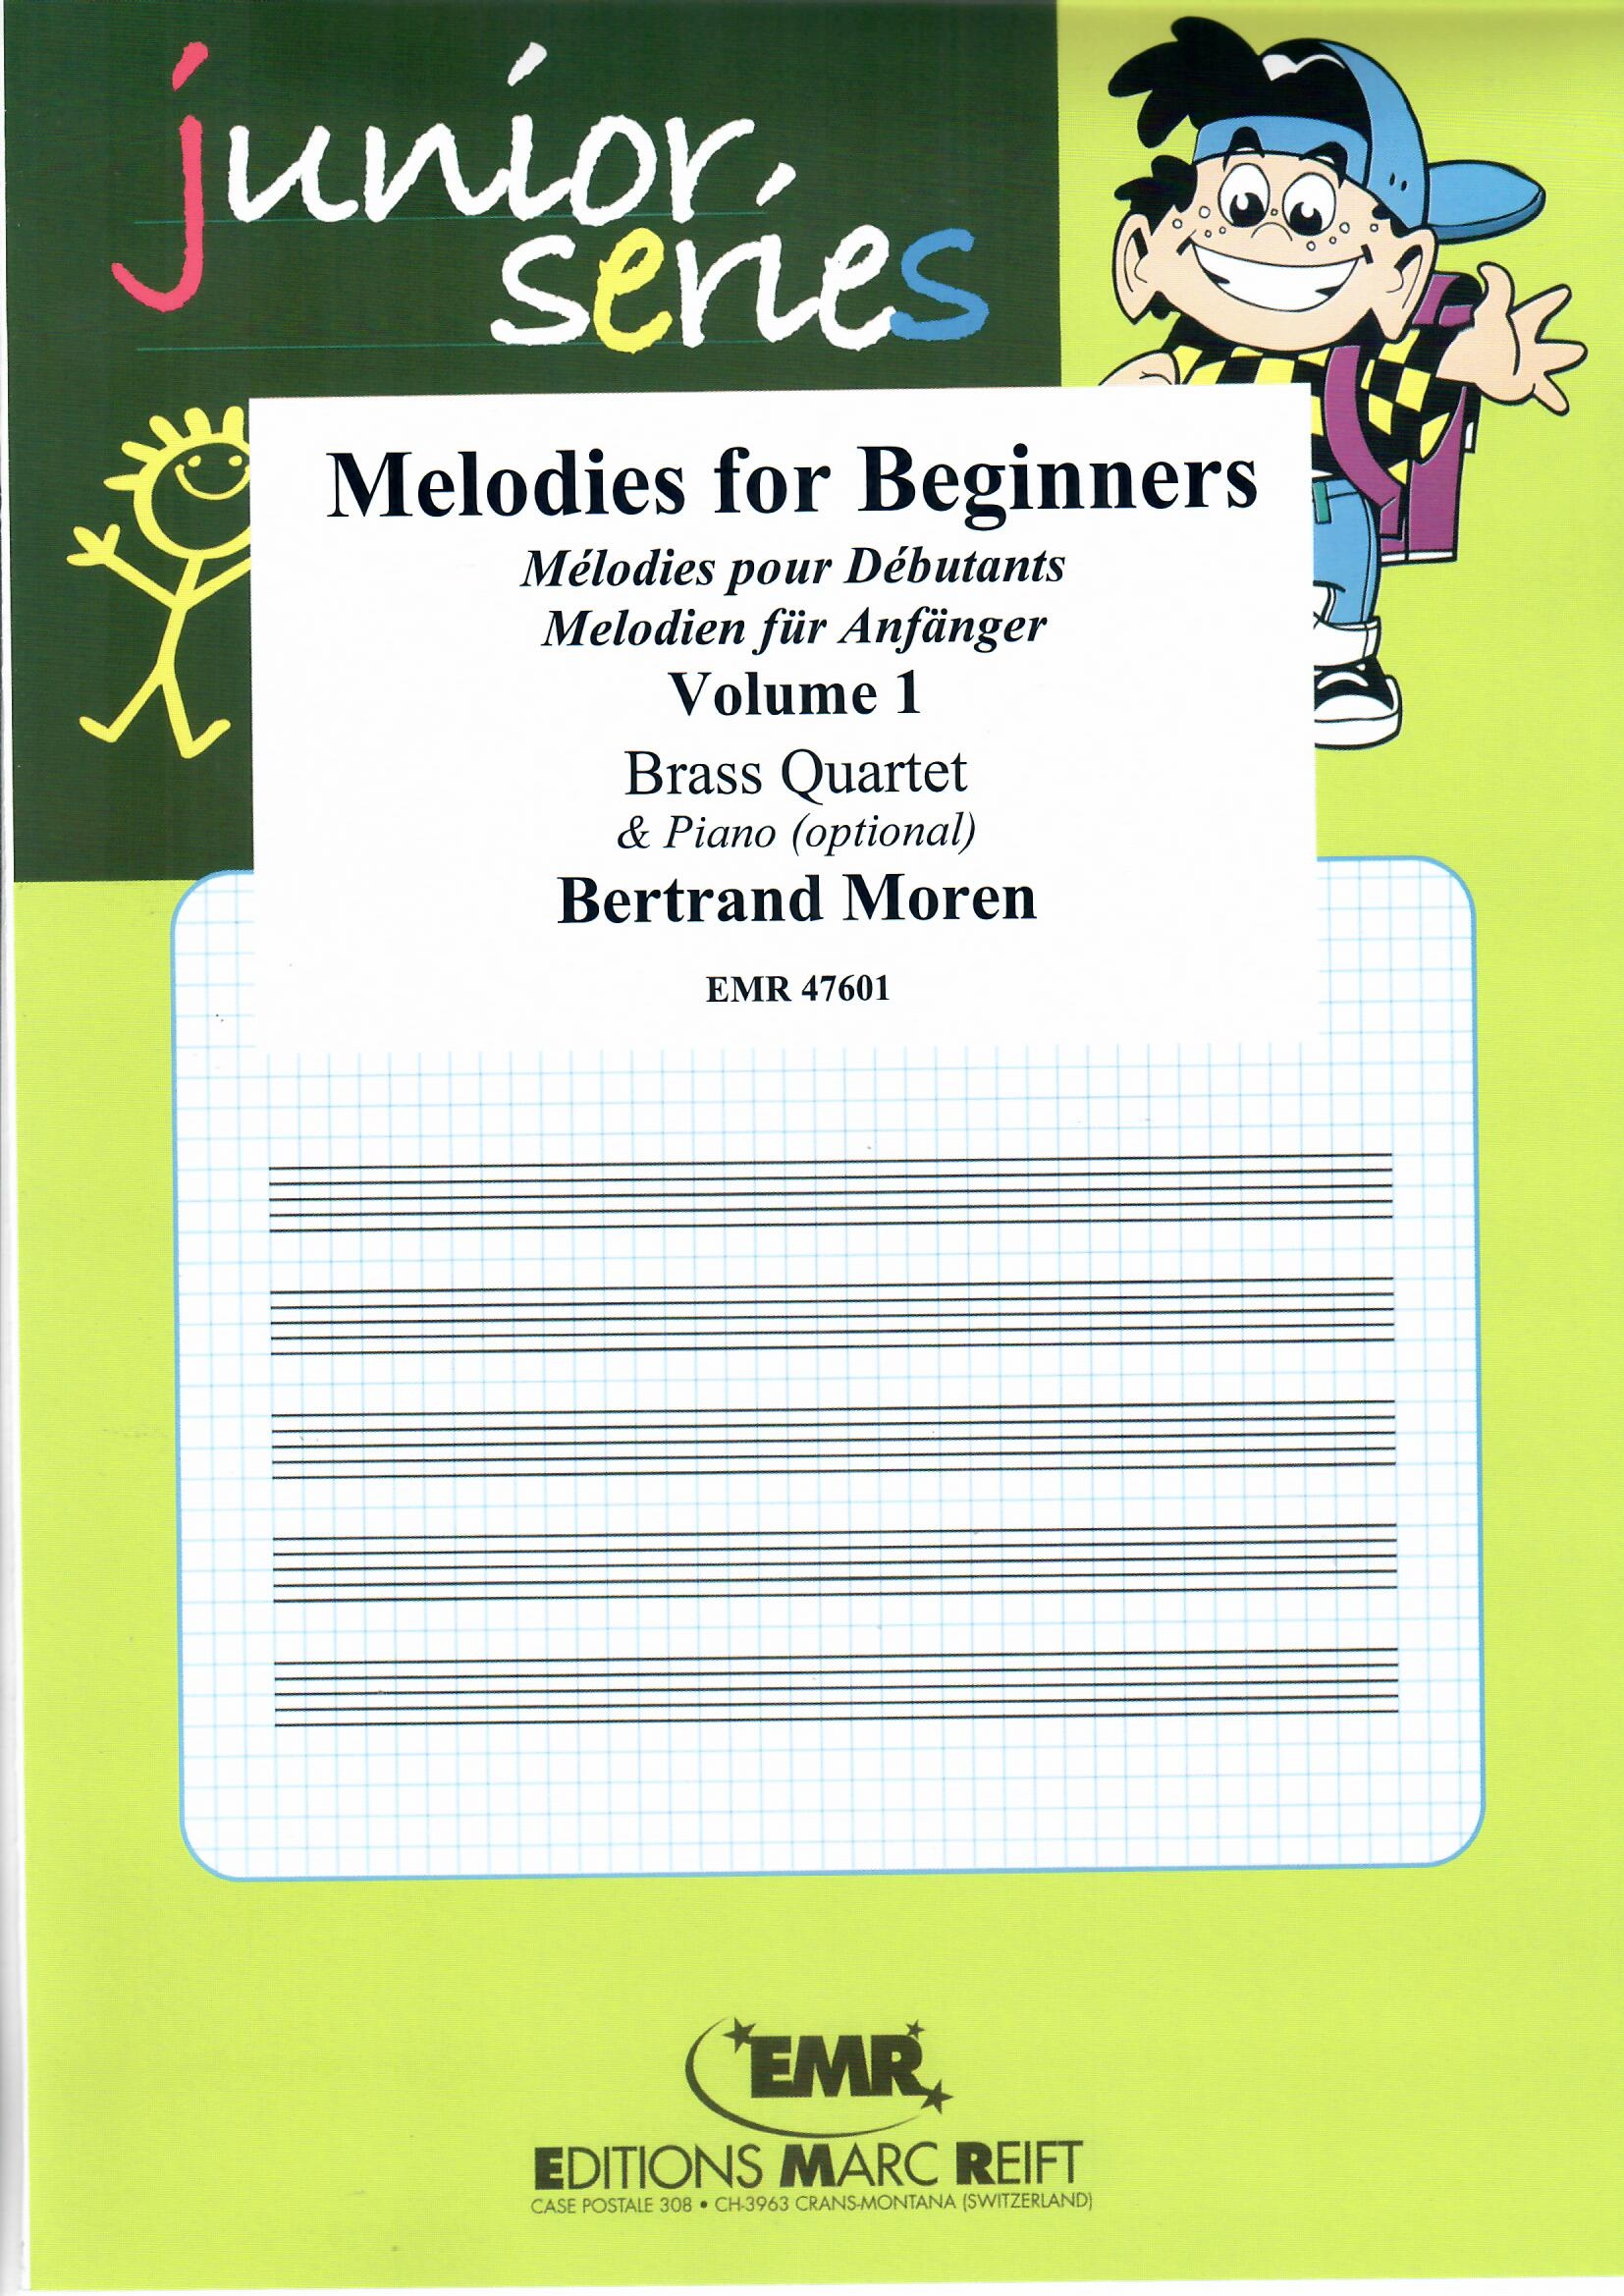 MELODIES FOR BEGINNERS VOLUME 1 - Quartet